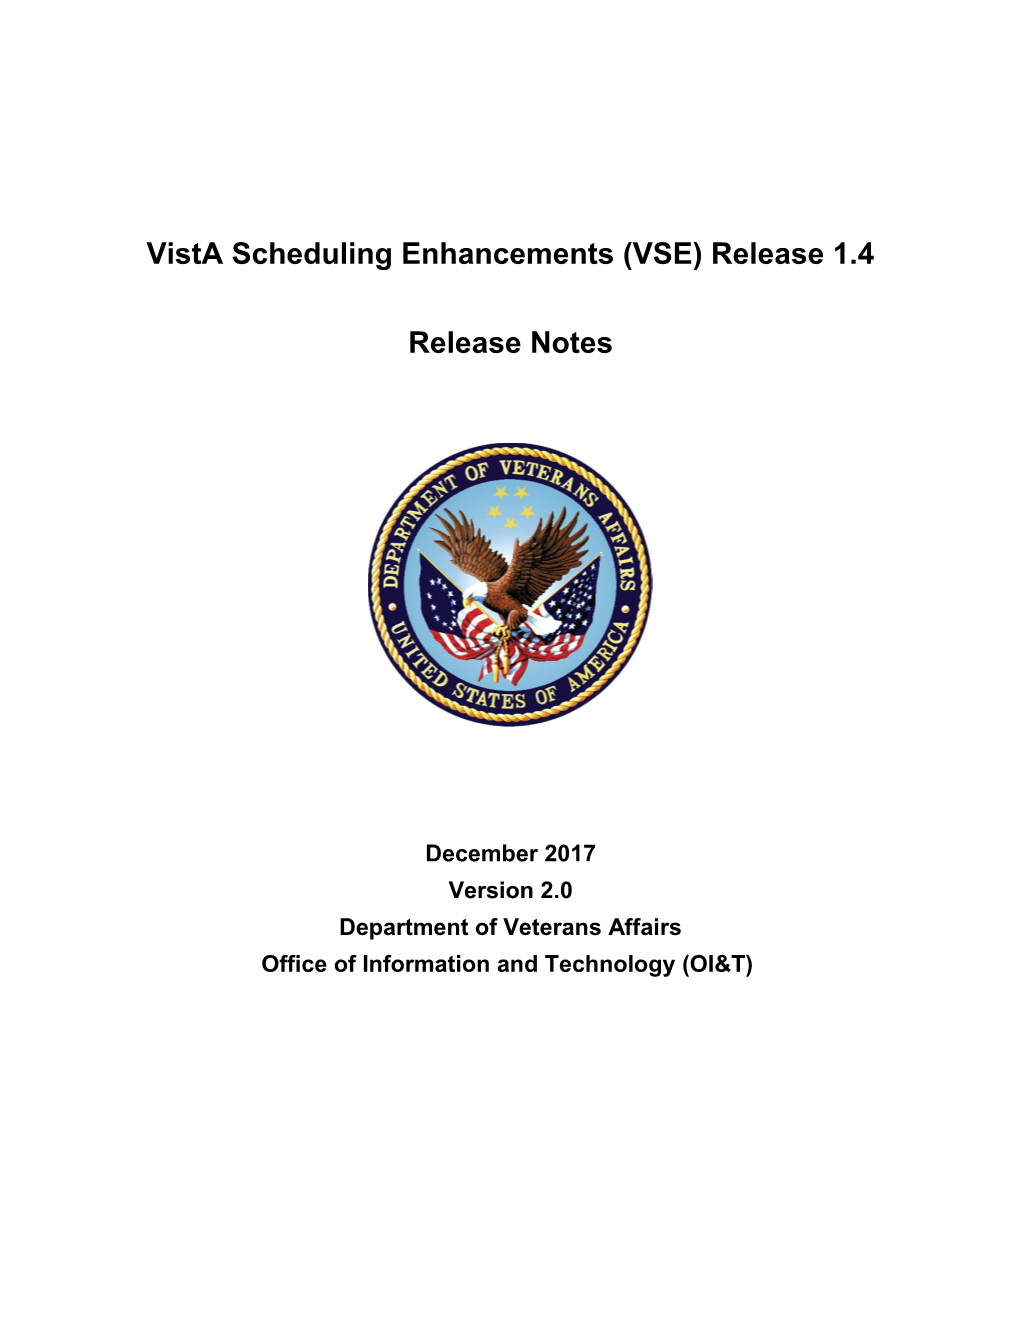 Vista Scheduling Enhancements Release Notes